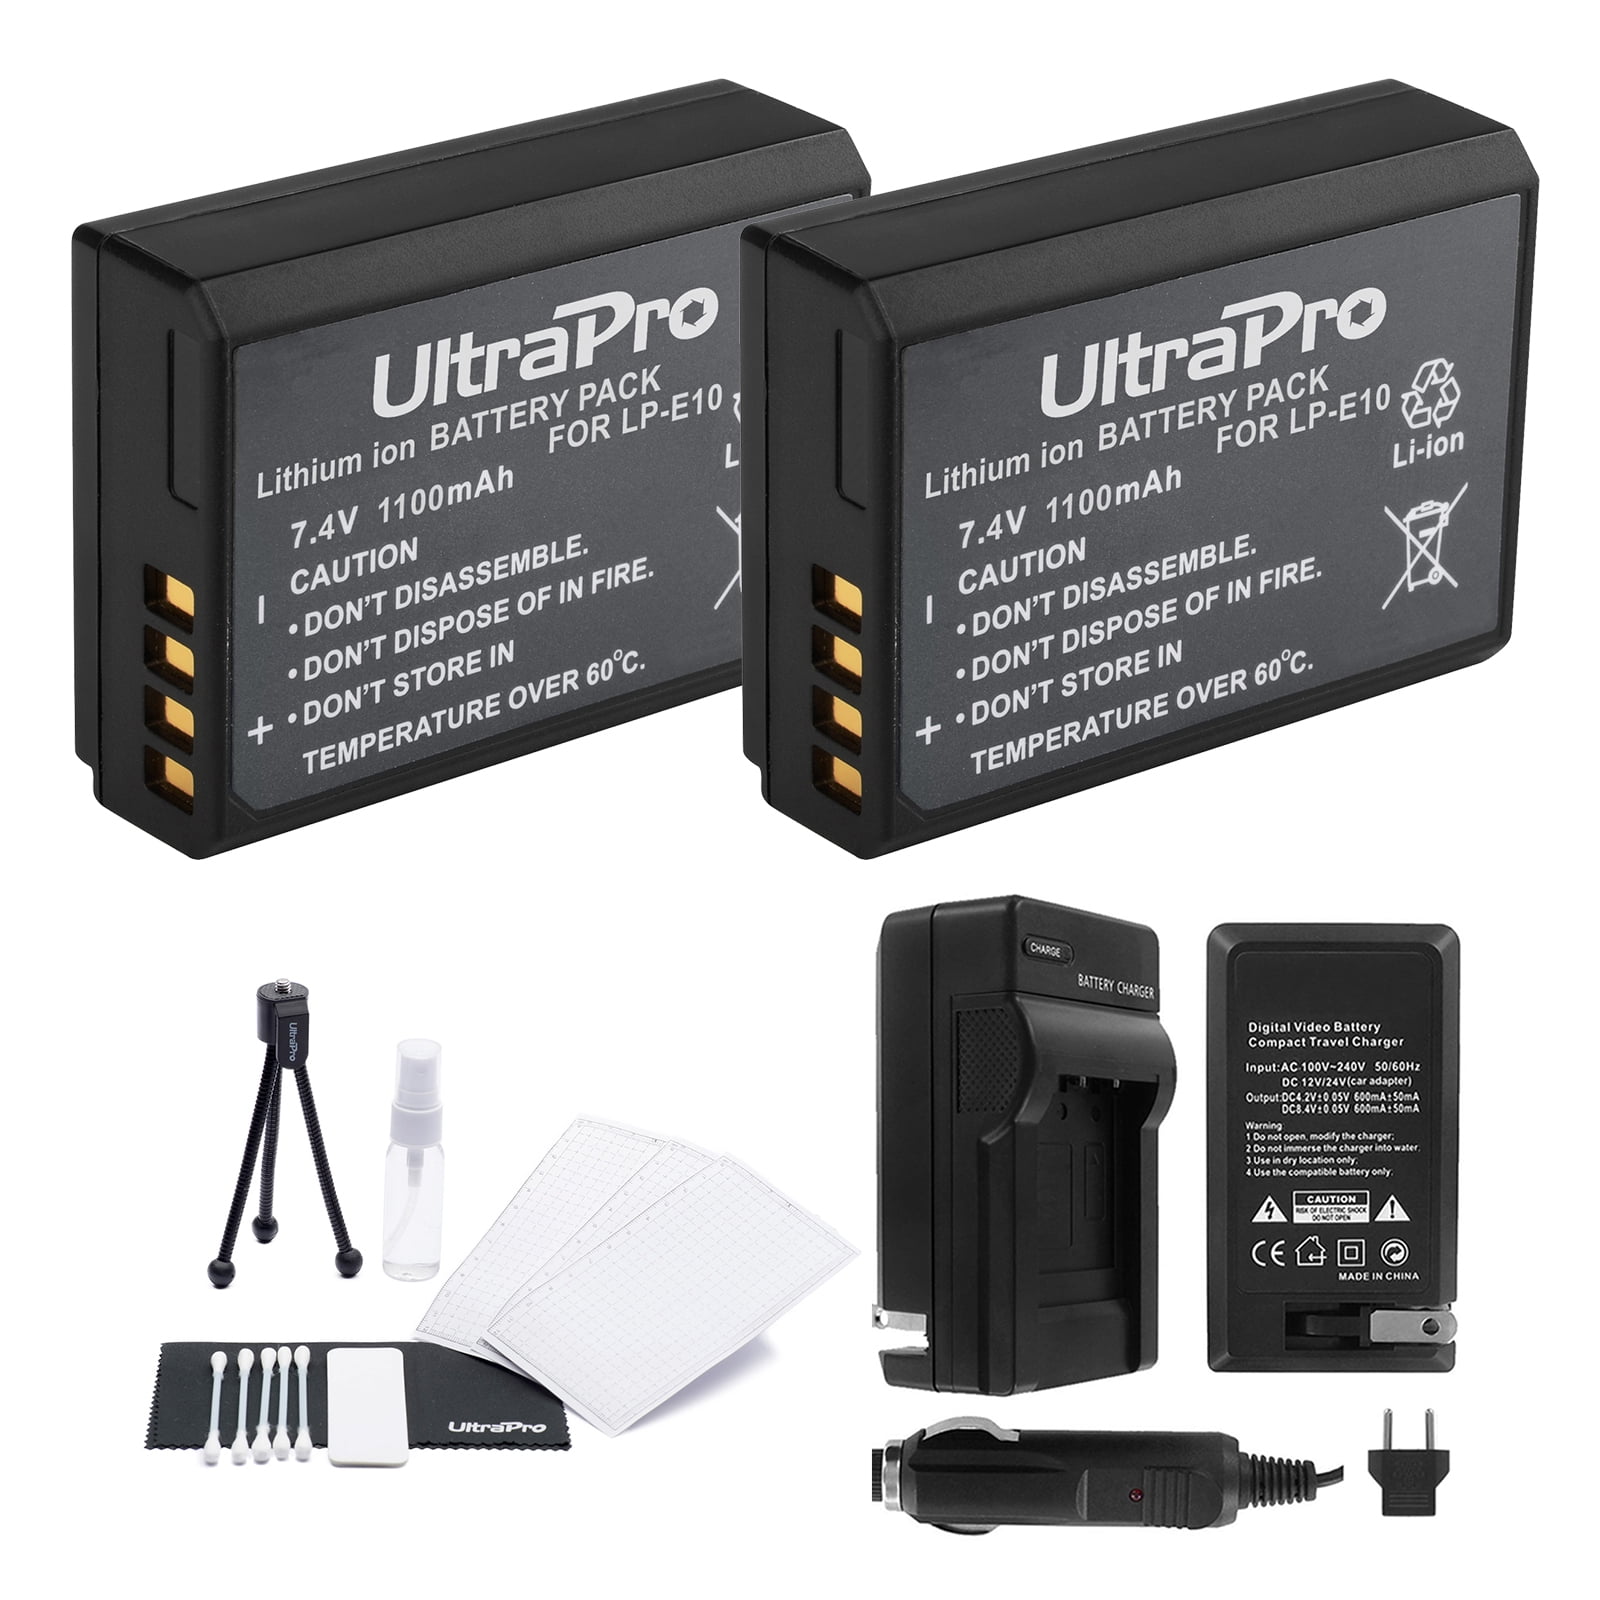 KLIC-7004 Battery+Charger+BONUS for Kodak PlaySport PlaySport Zx3 PlayTouch 